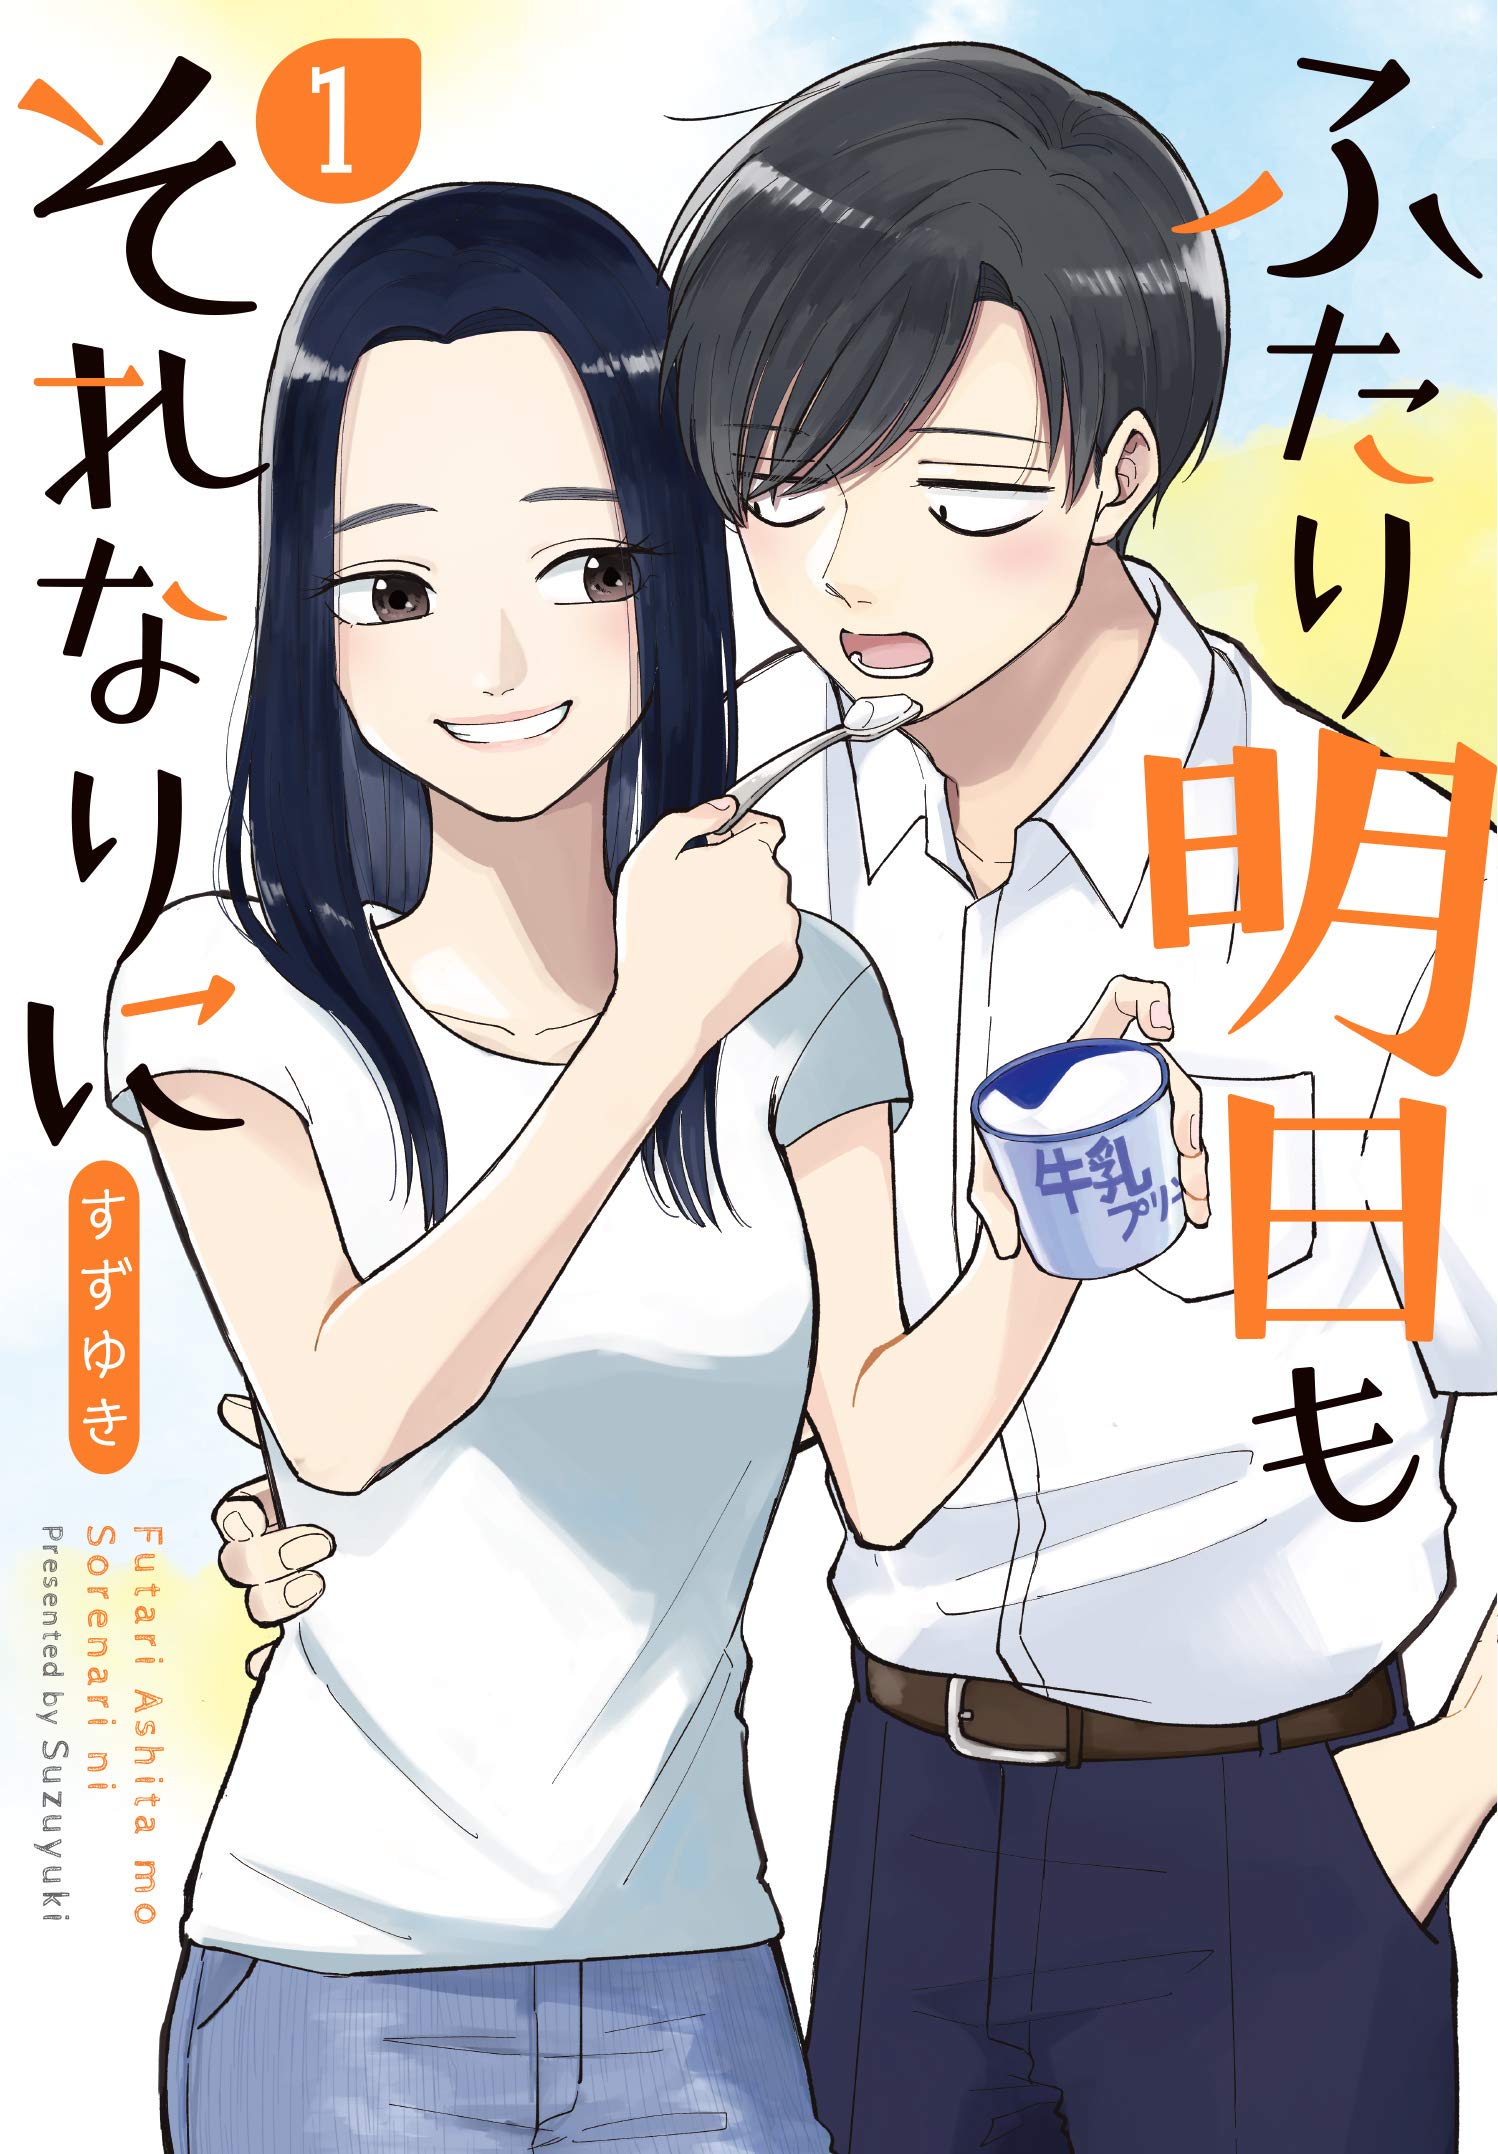 Romance manga - the two gets by tomorrow